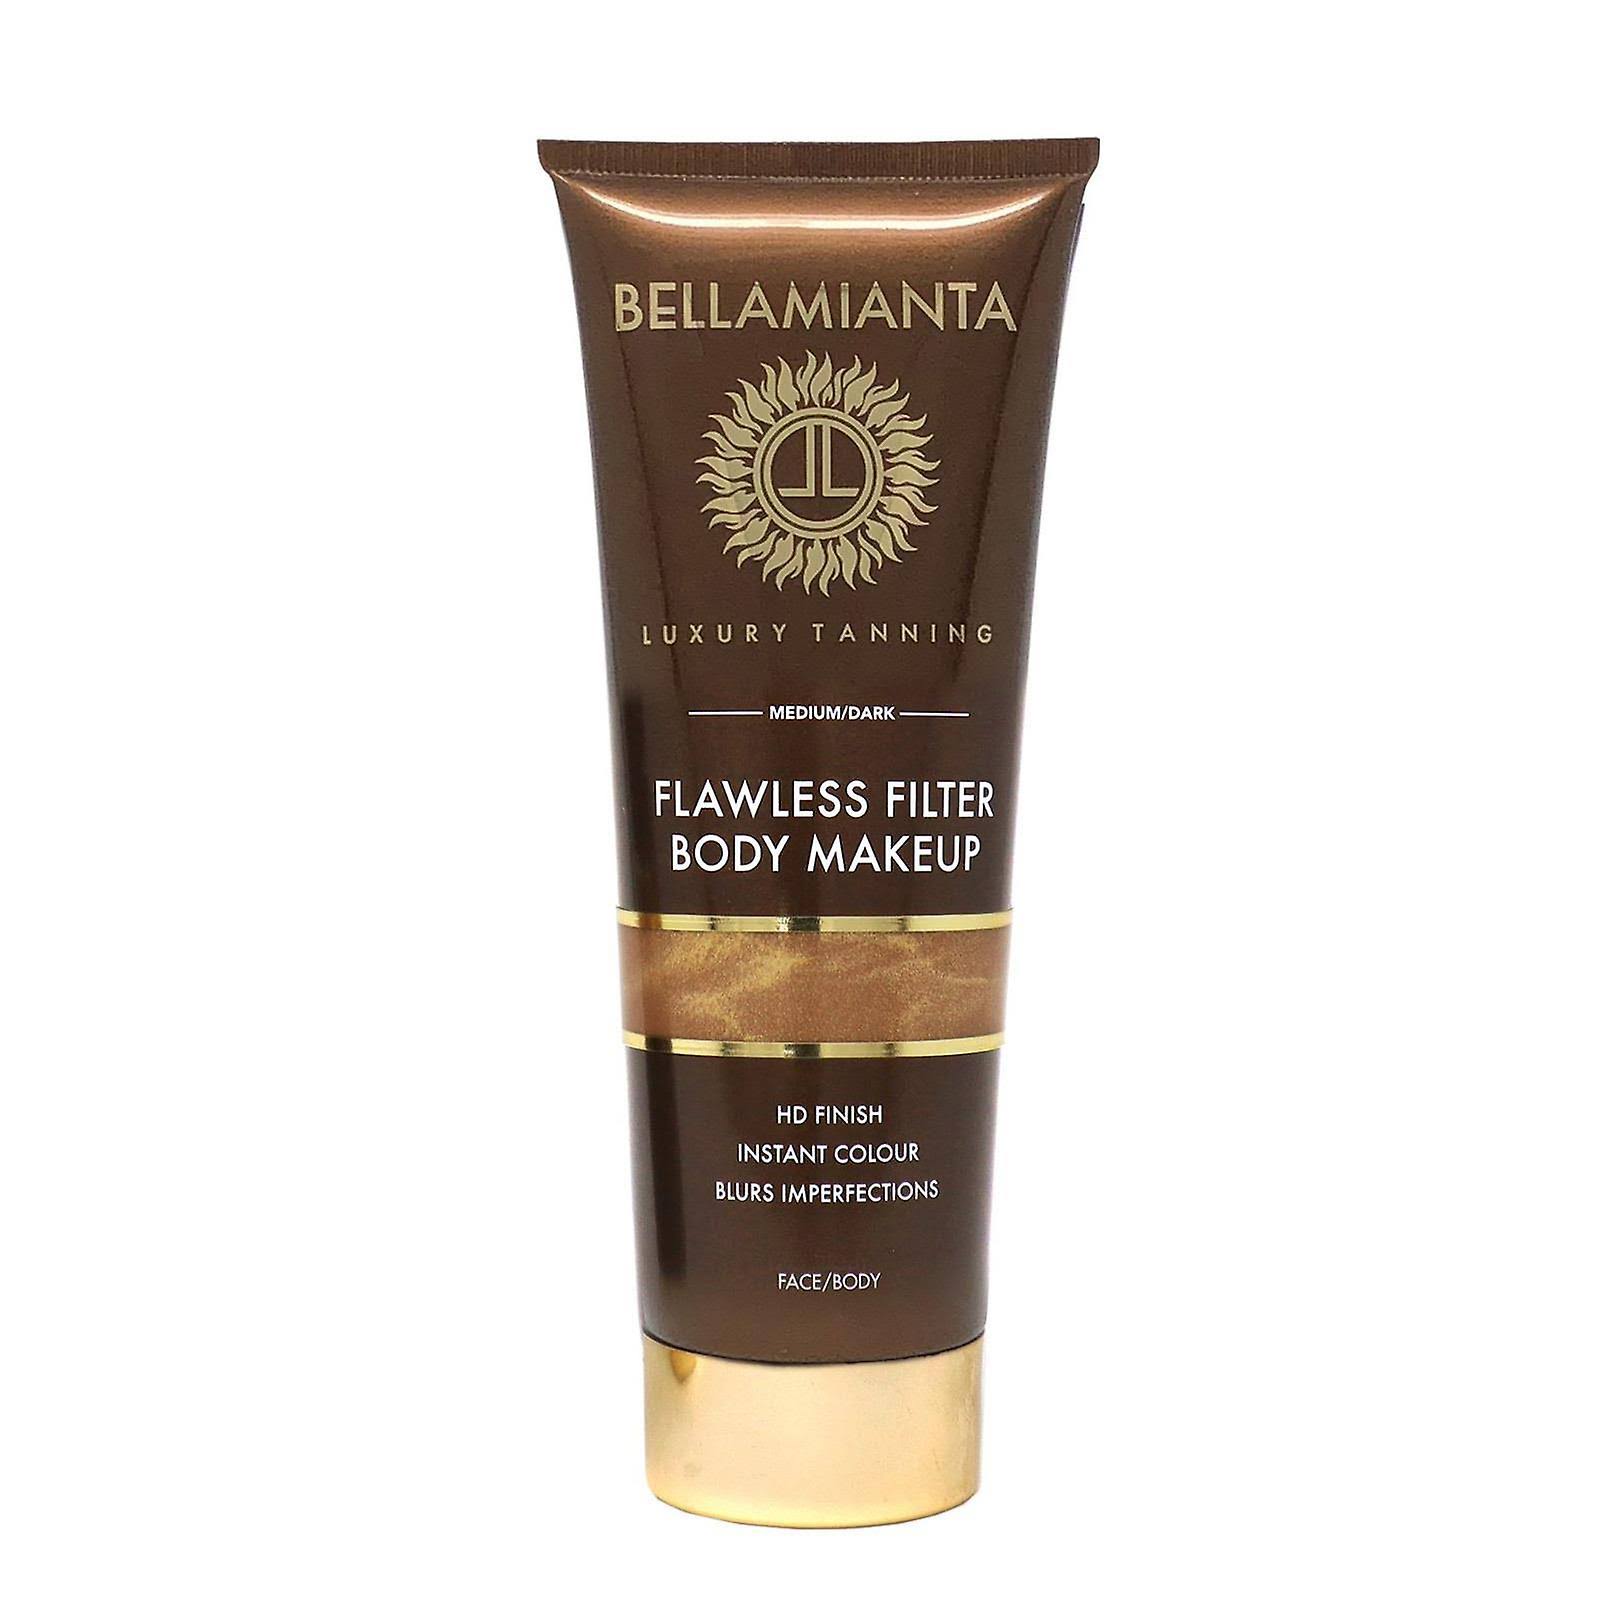 Bellamianta - Flawless Filter Body Makeup - 100ml - Medium/Dark